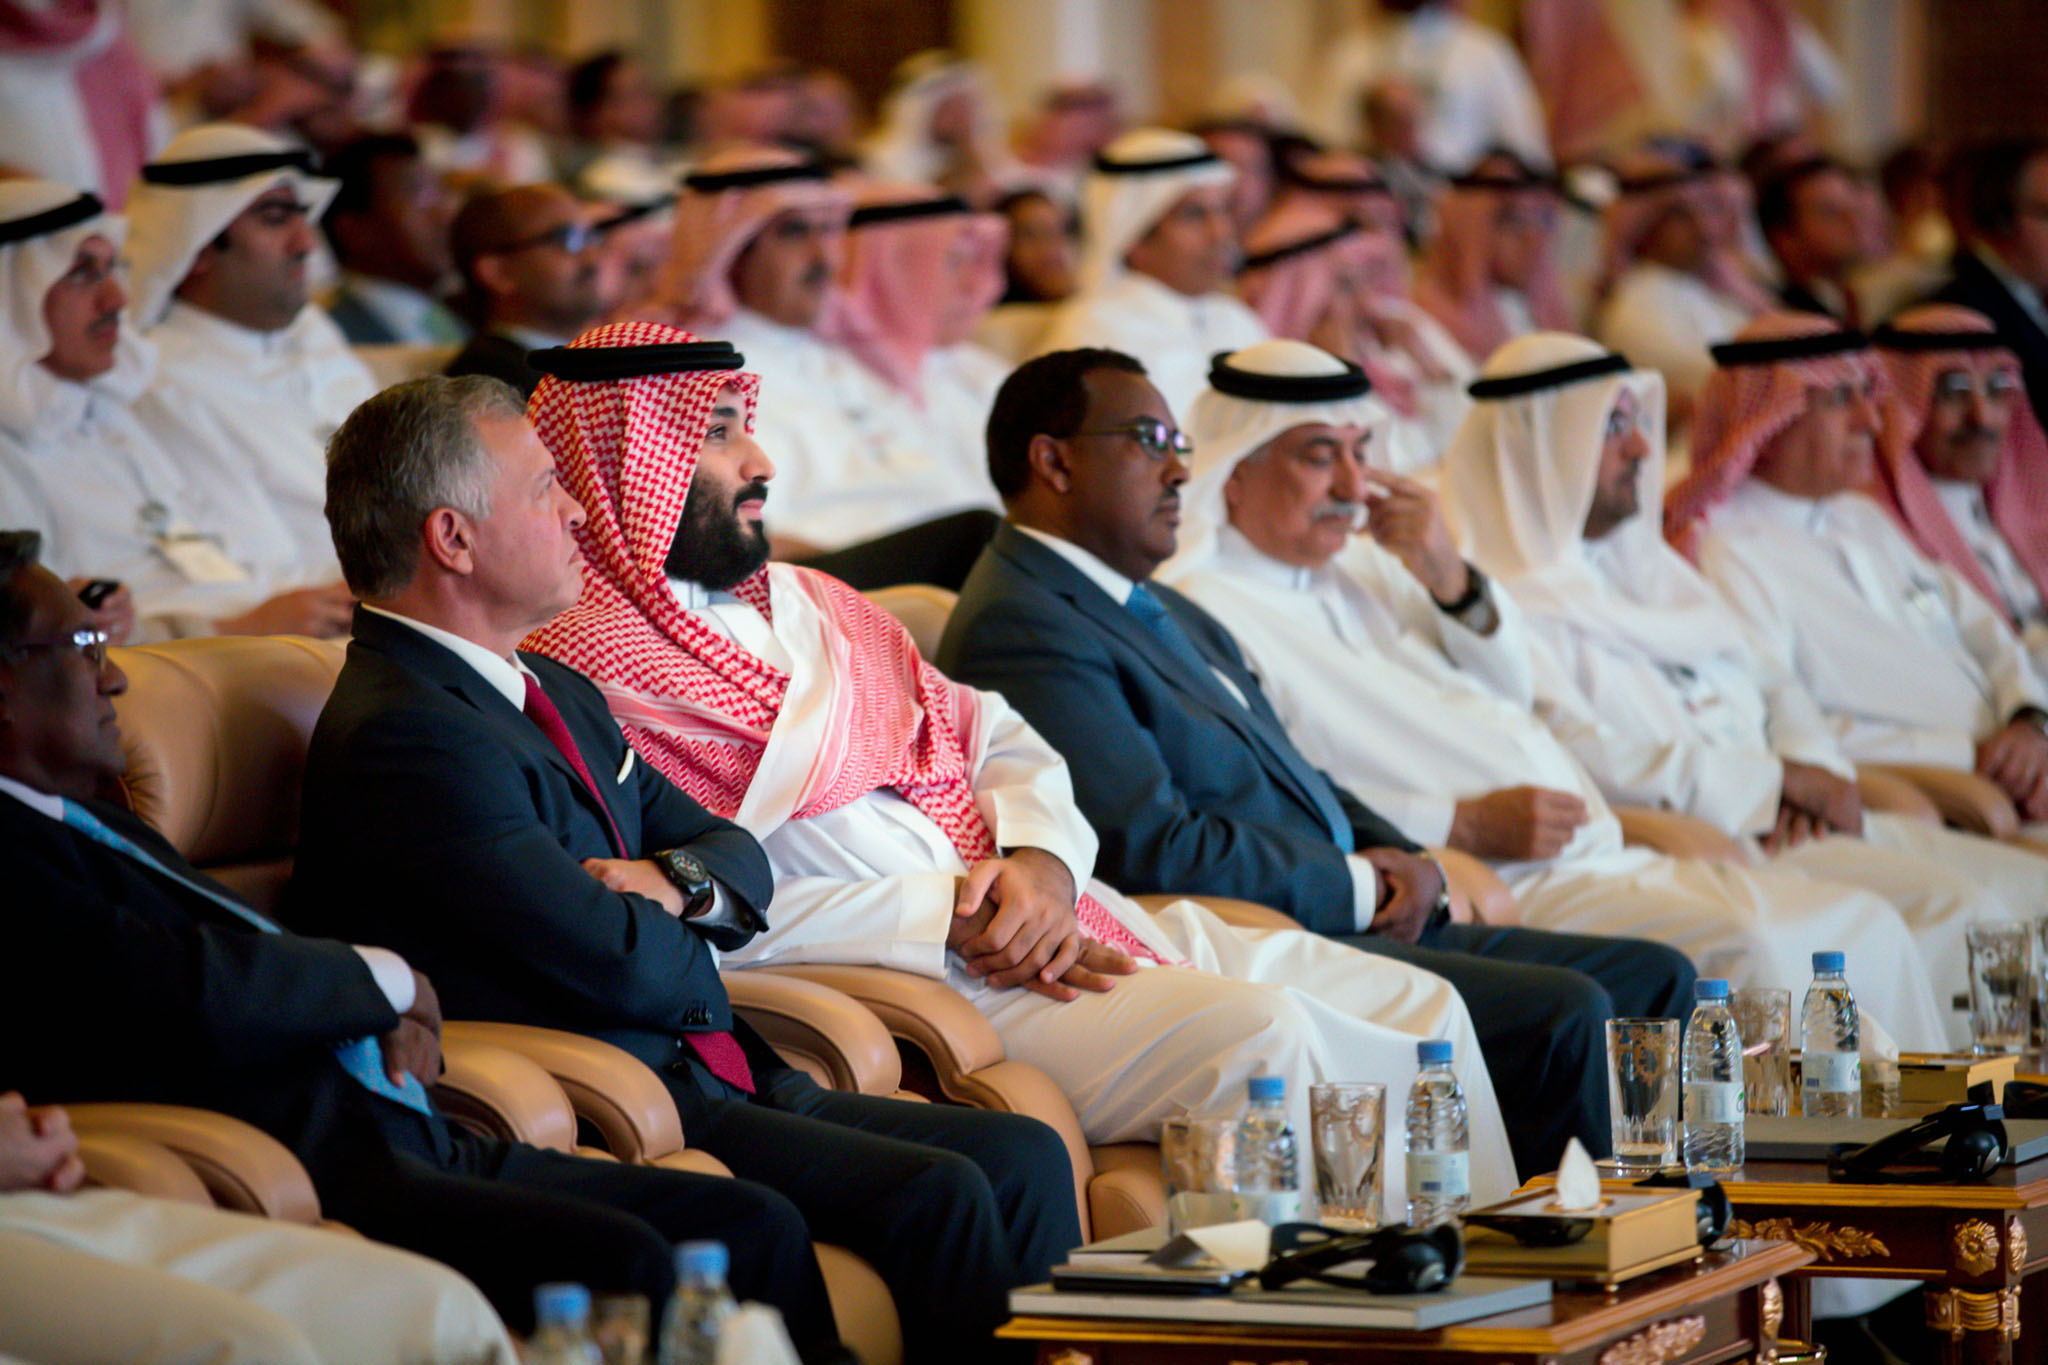 Saudi Arabia’s crown prince, Mohammed bin Salman, third from left, sits next to King Abdullah of Jordan, second from left in Riyadh, Saudi Arabia, on Tuesday, Oct. 23, 2018. (Tasneem Alsultan/The New York Times)